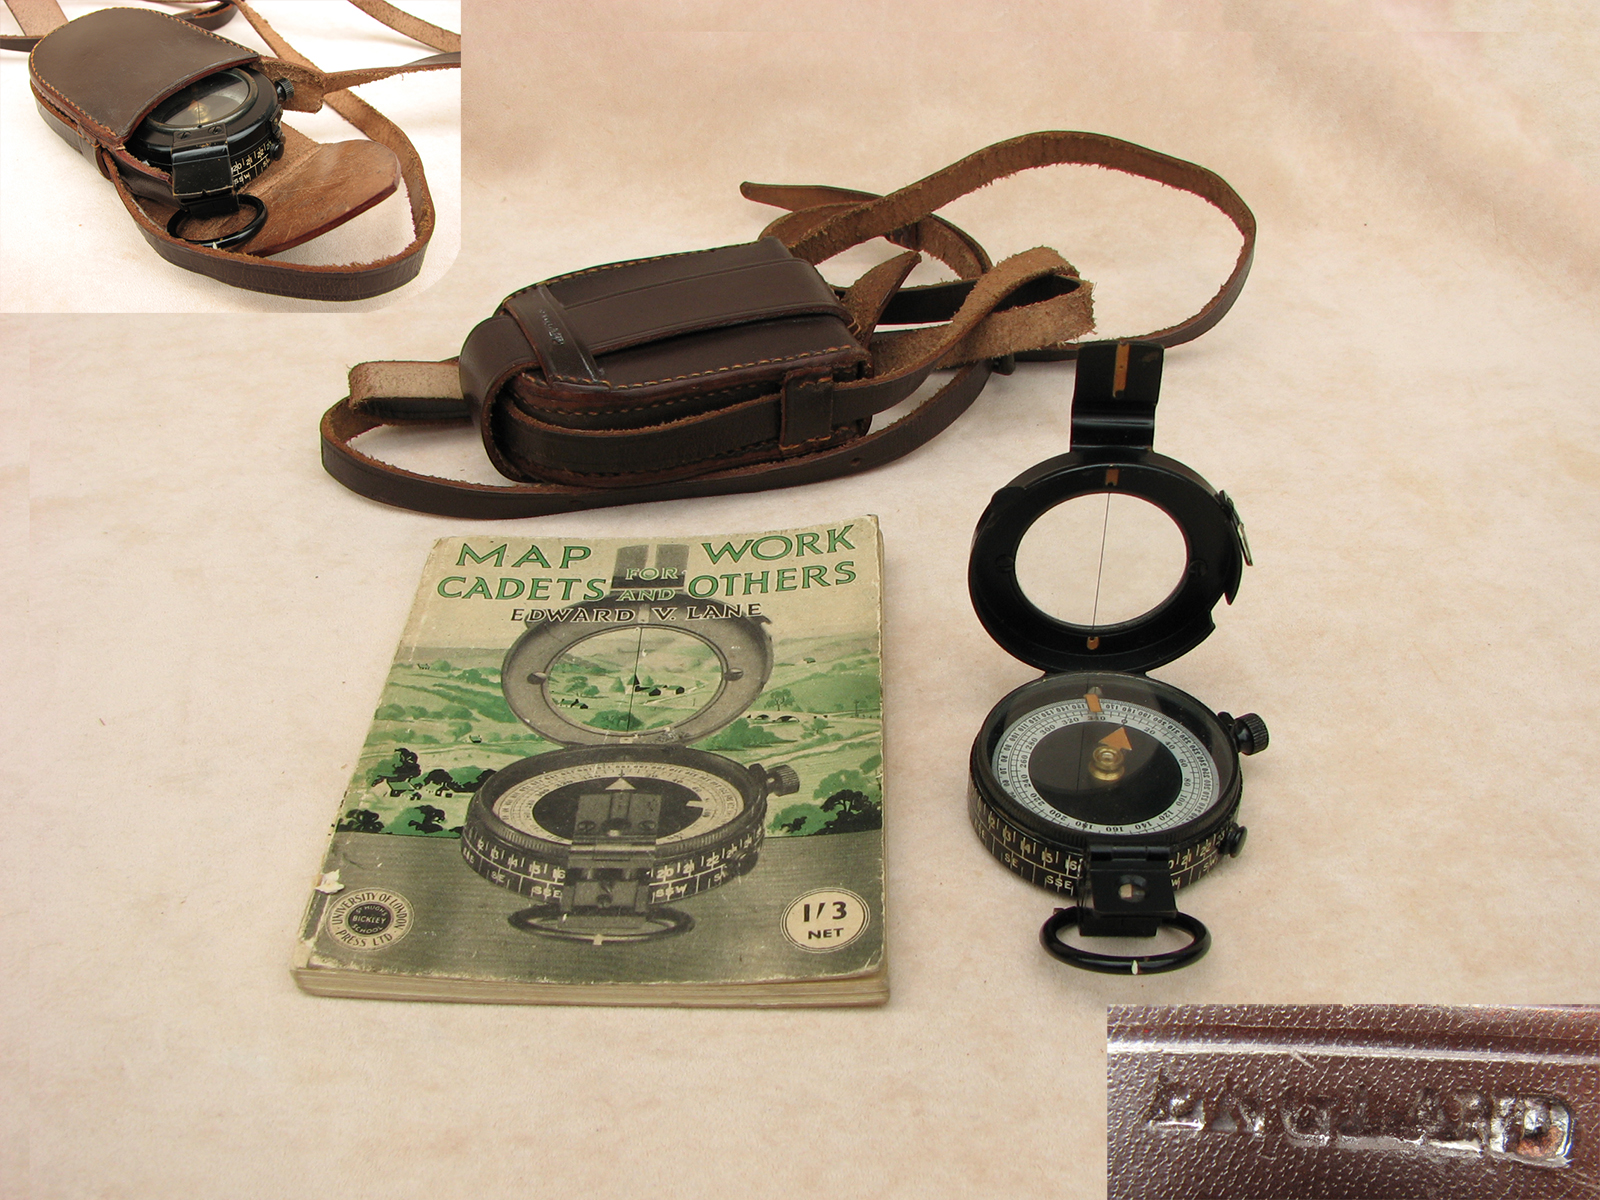 WW2 era MK IX prismatic marching compass with cadet handbook